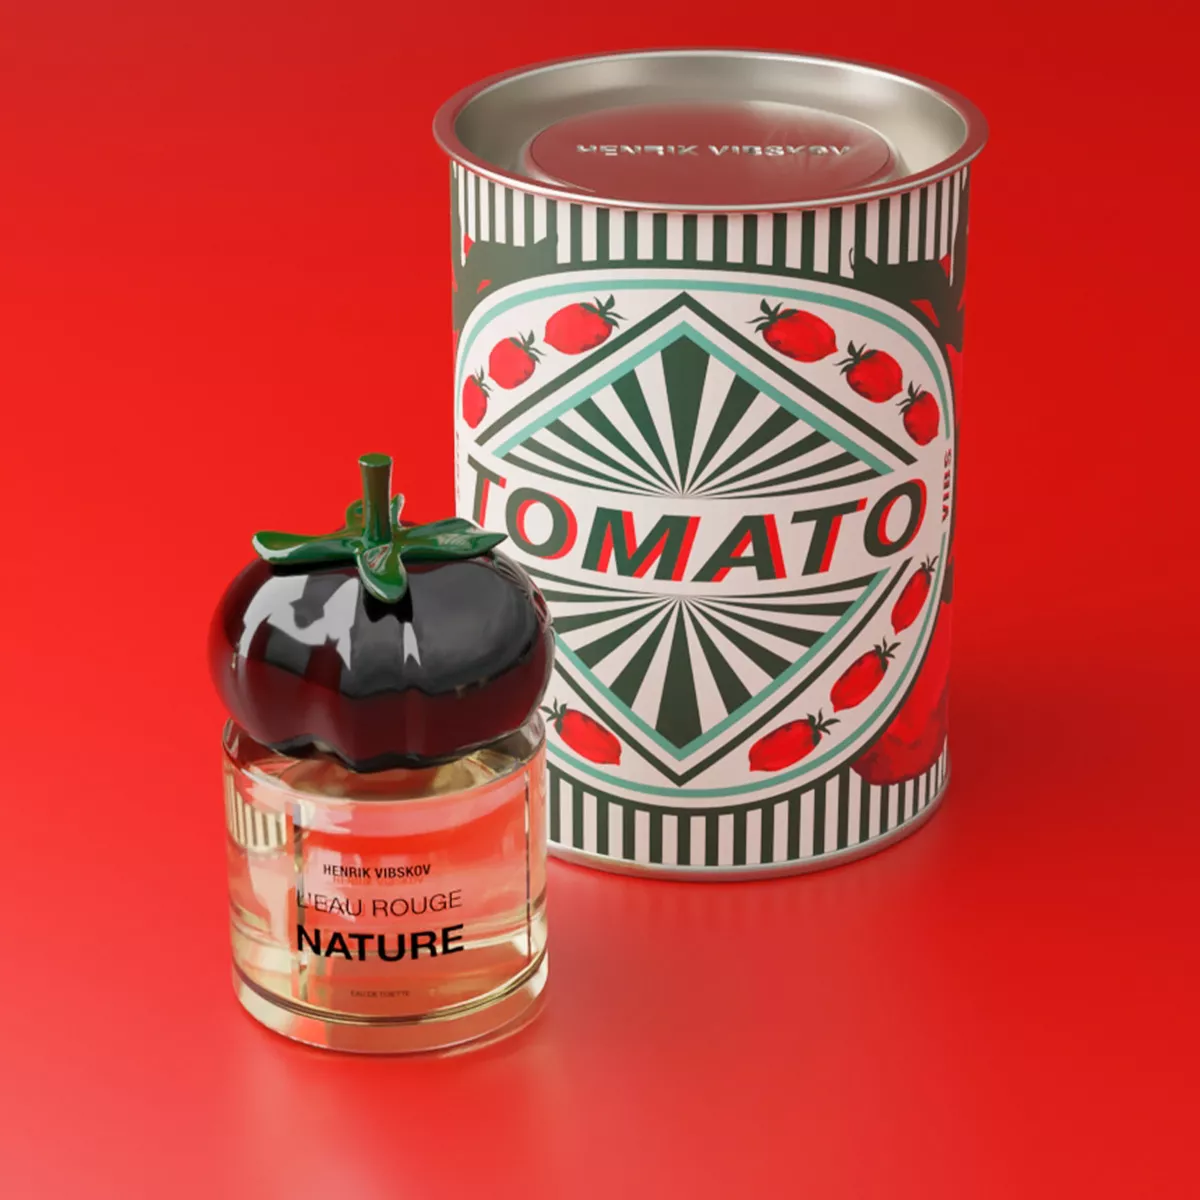 Tomatenparfum Nature.